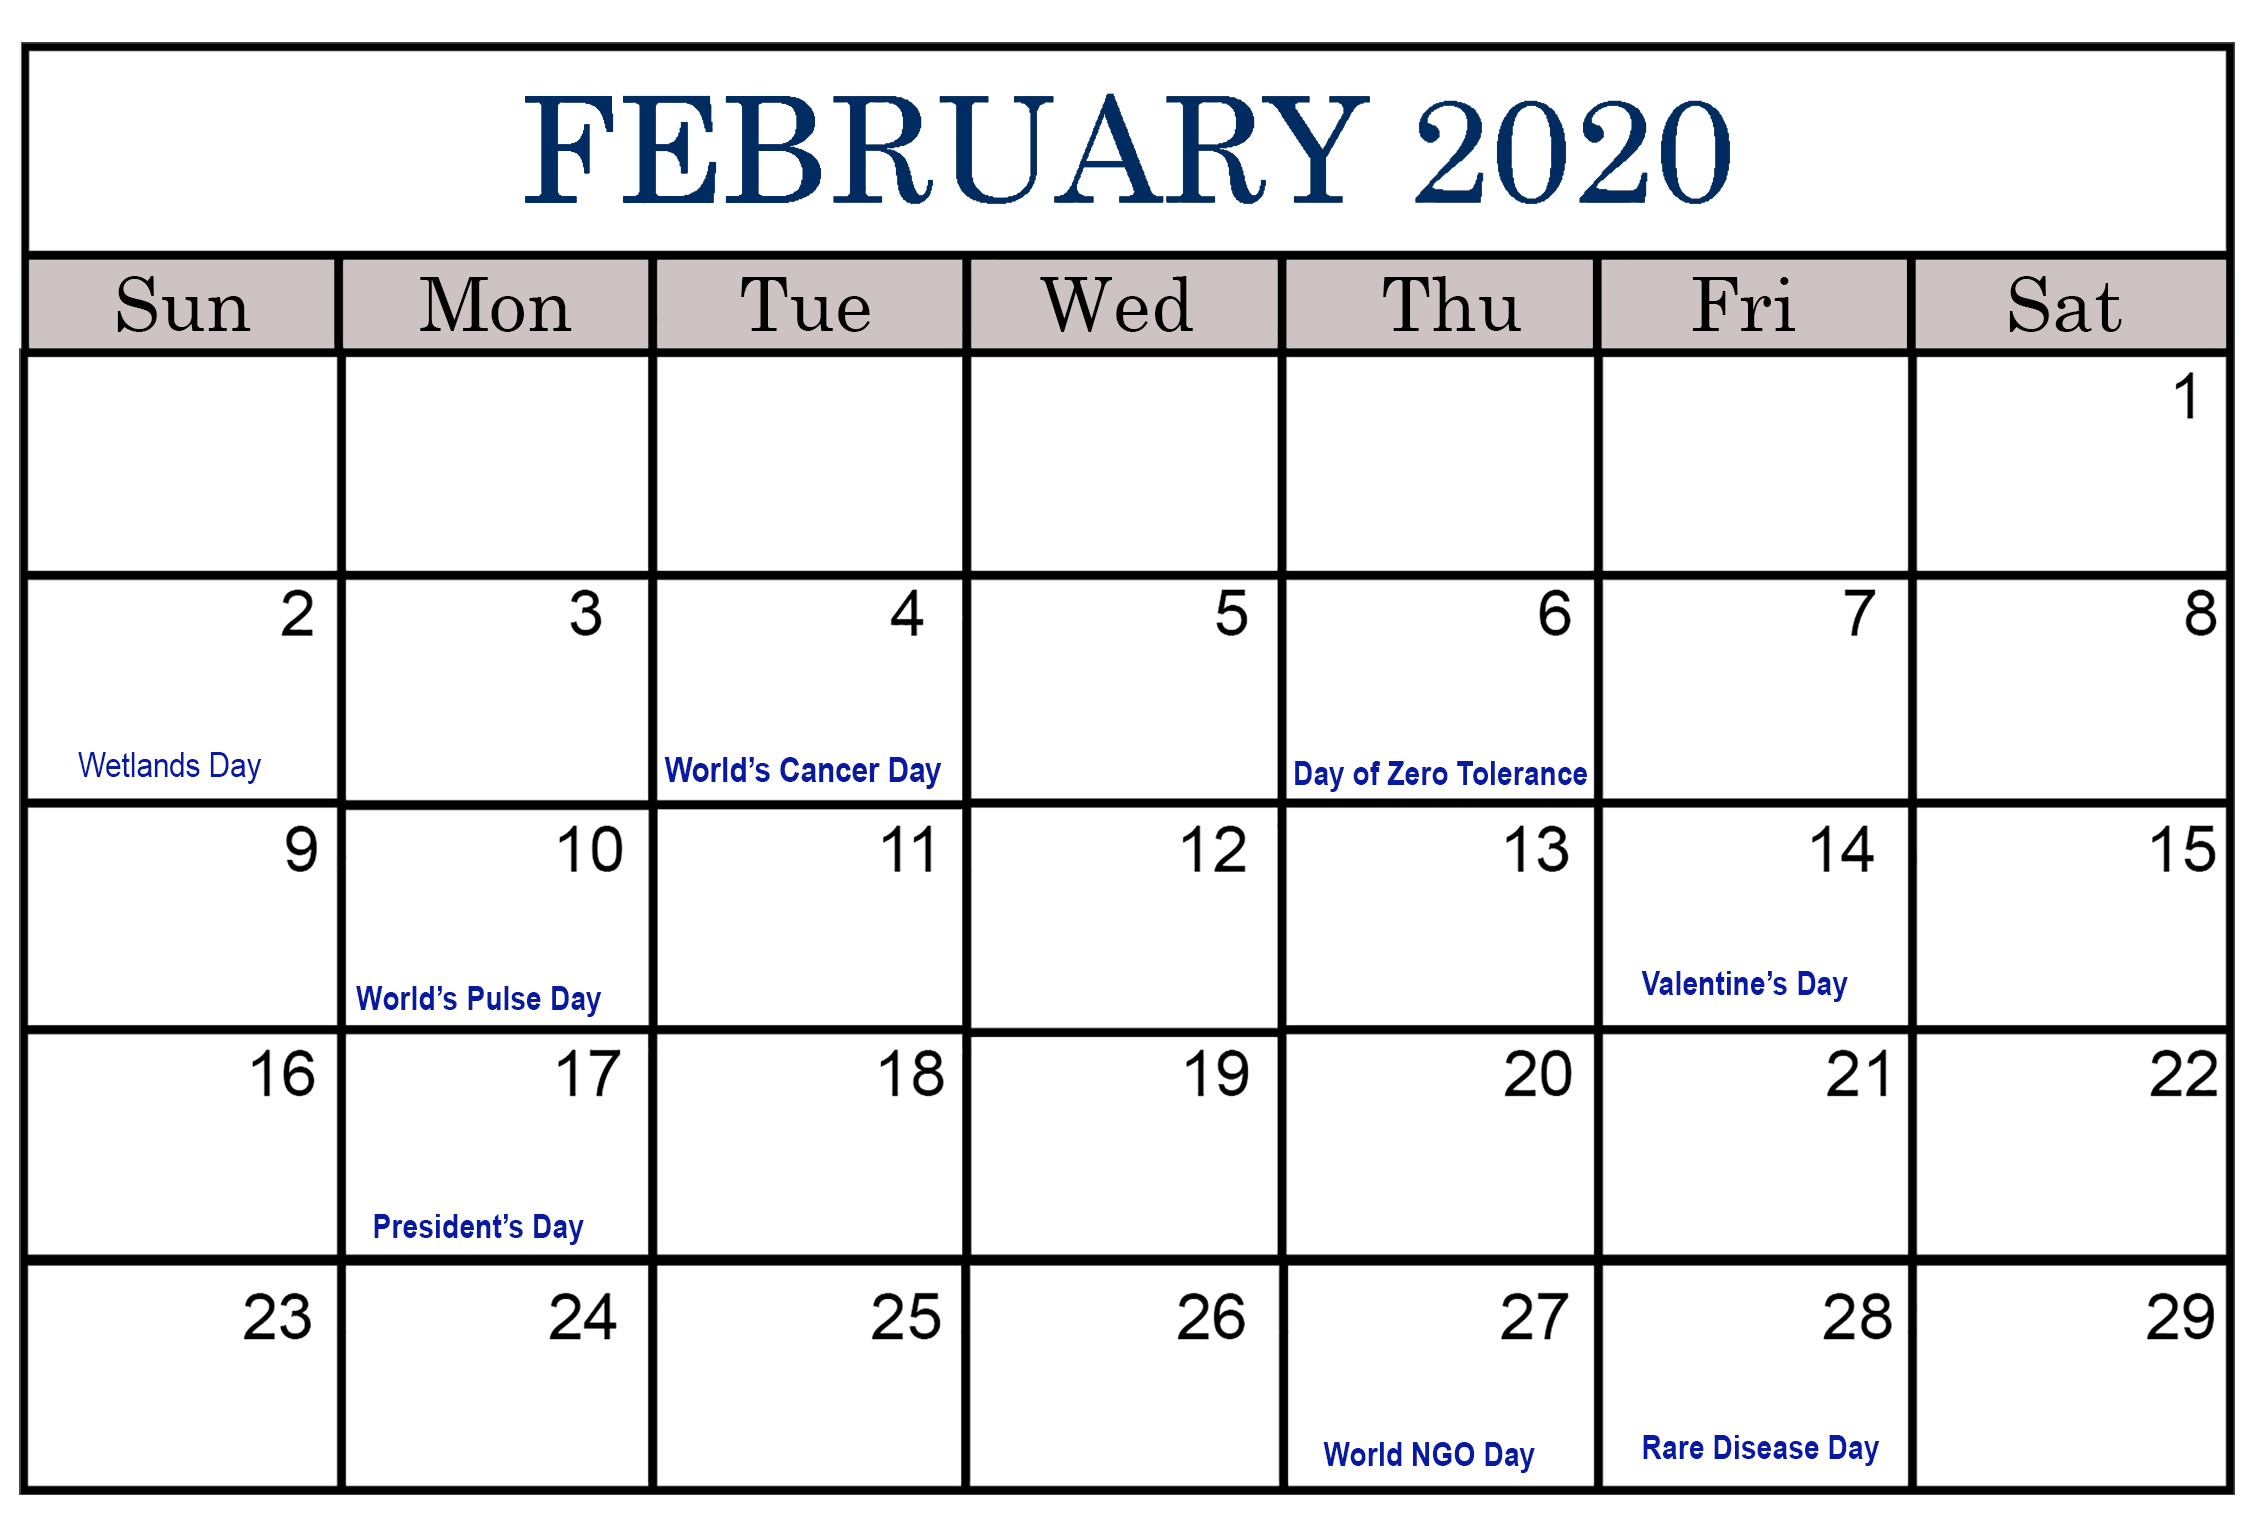 February Calendar 2020 with Holidays